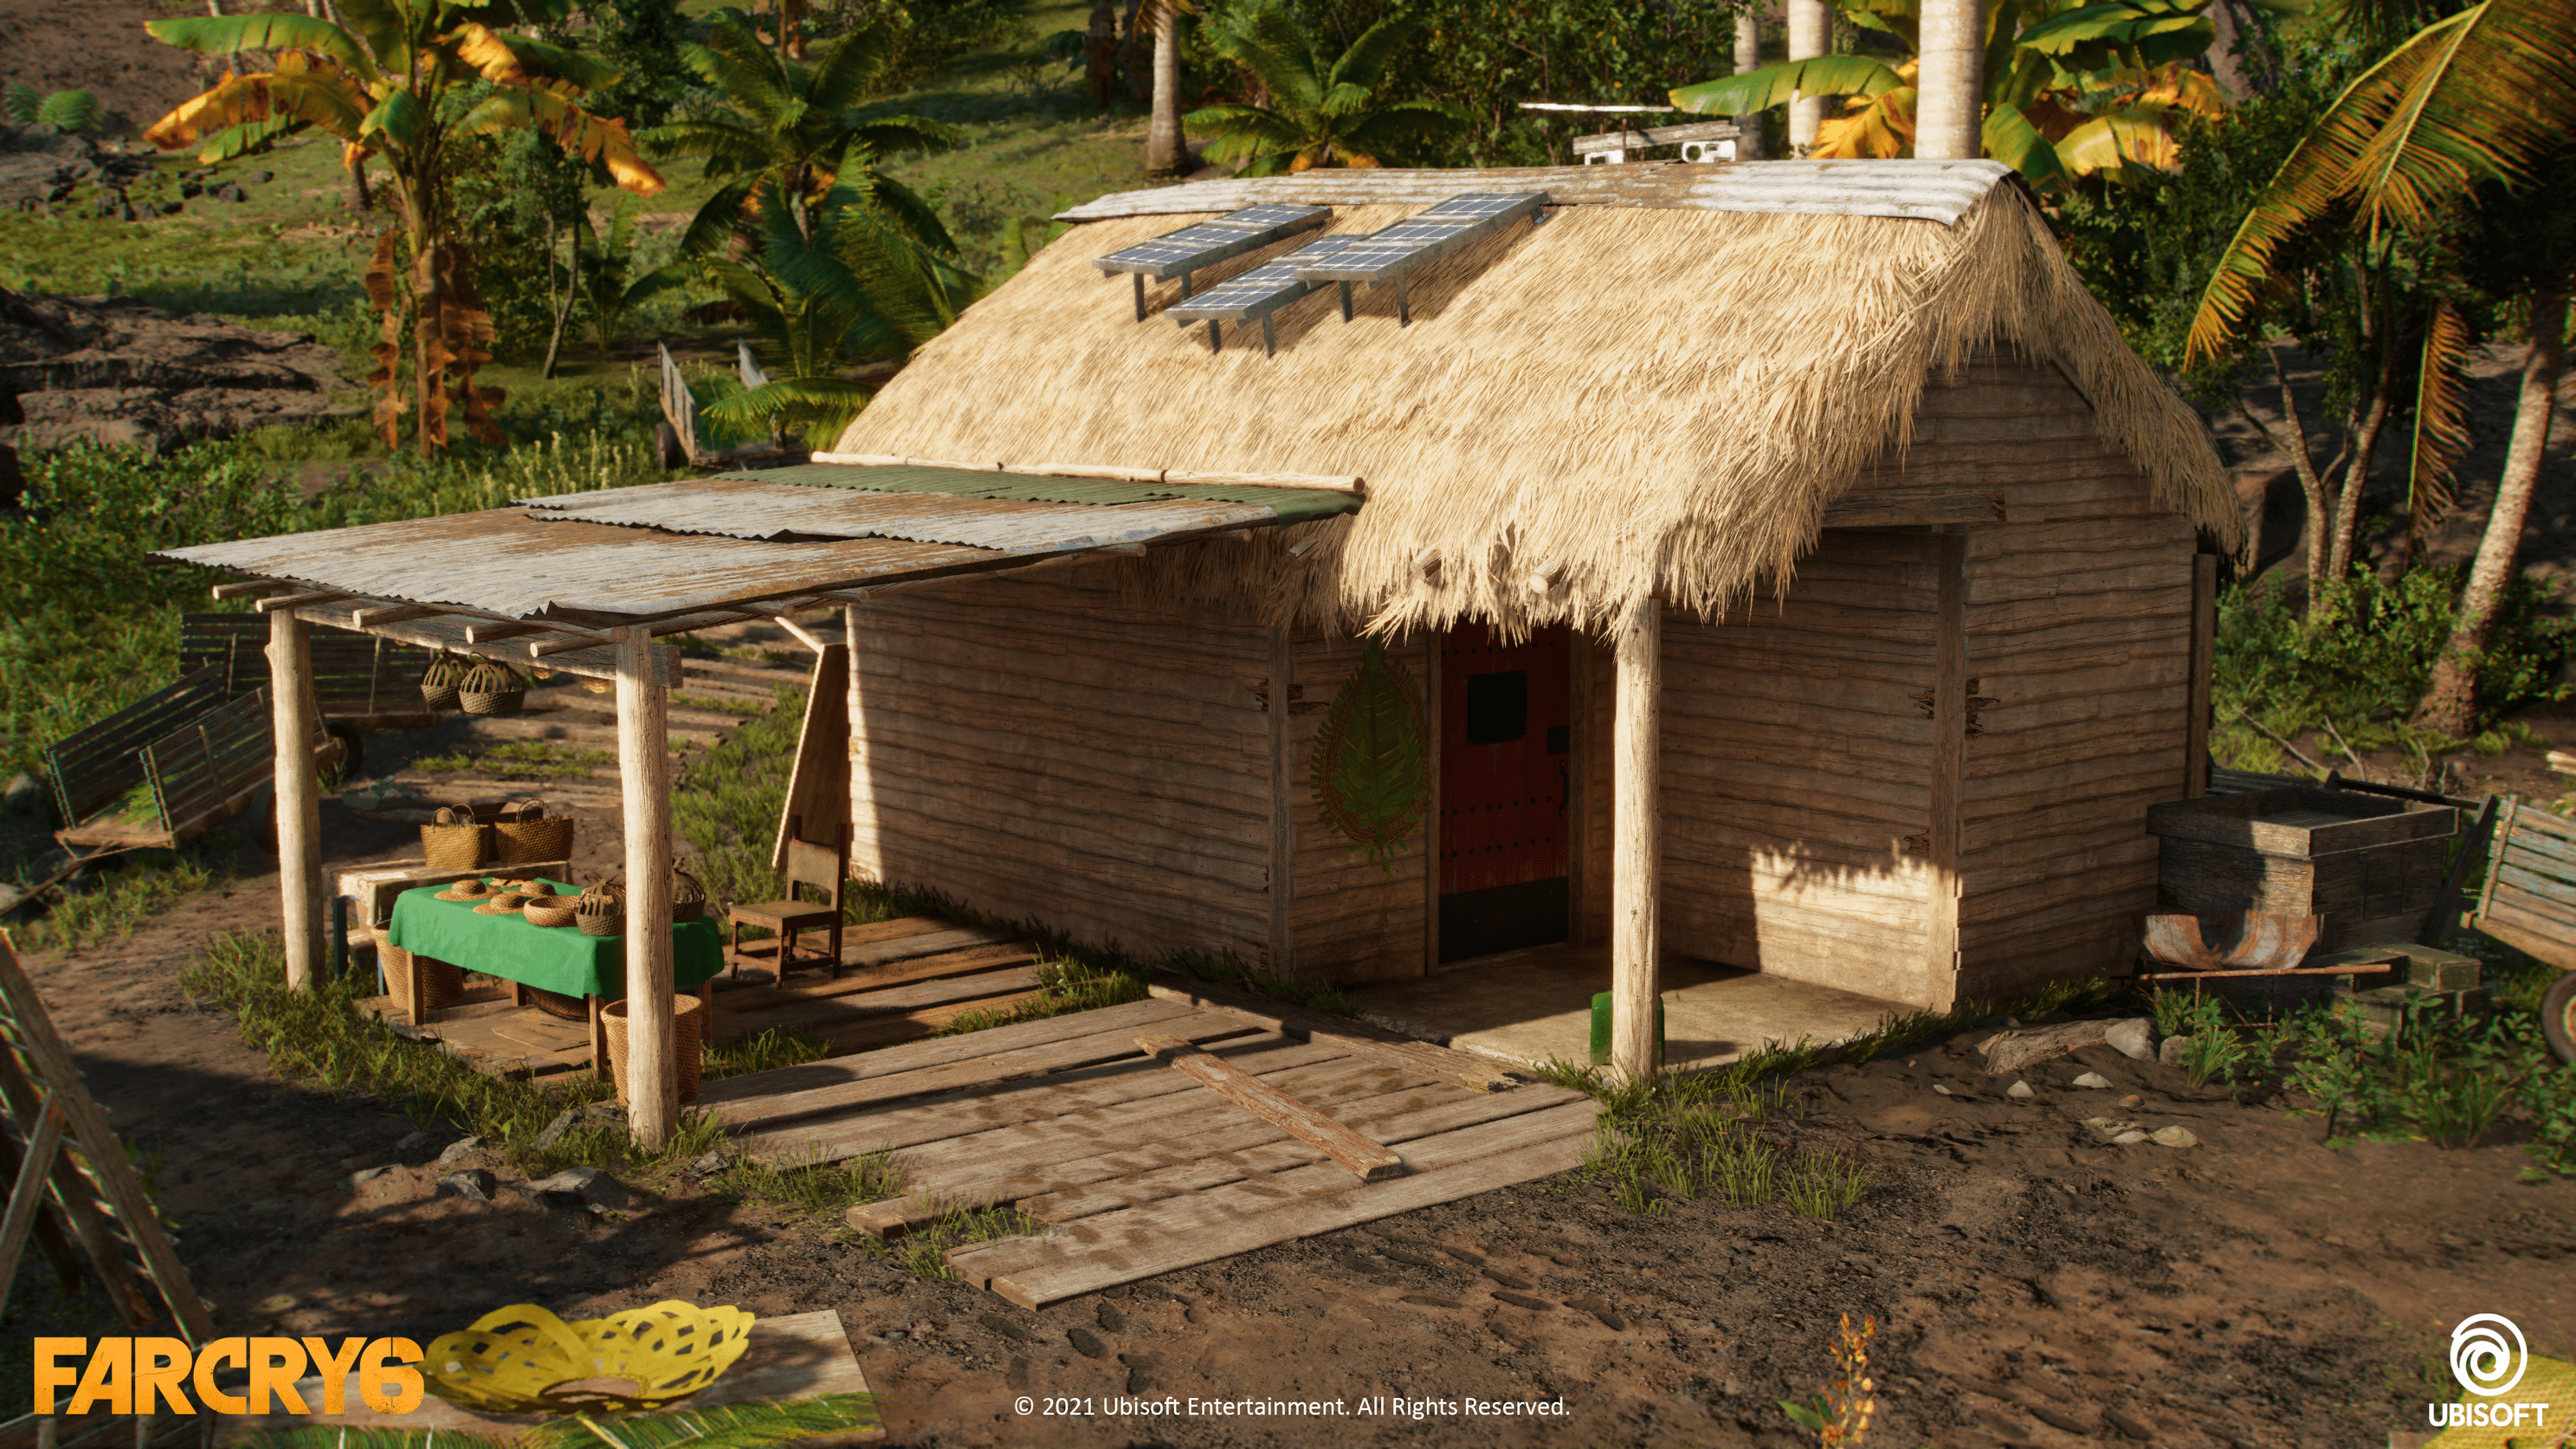 Far Cry 6 art, straw hut with solar panels